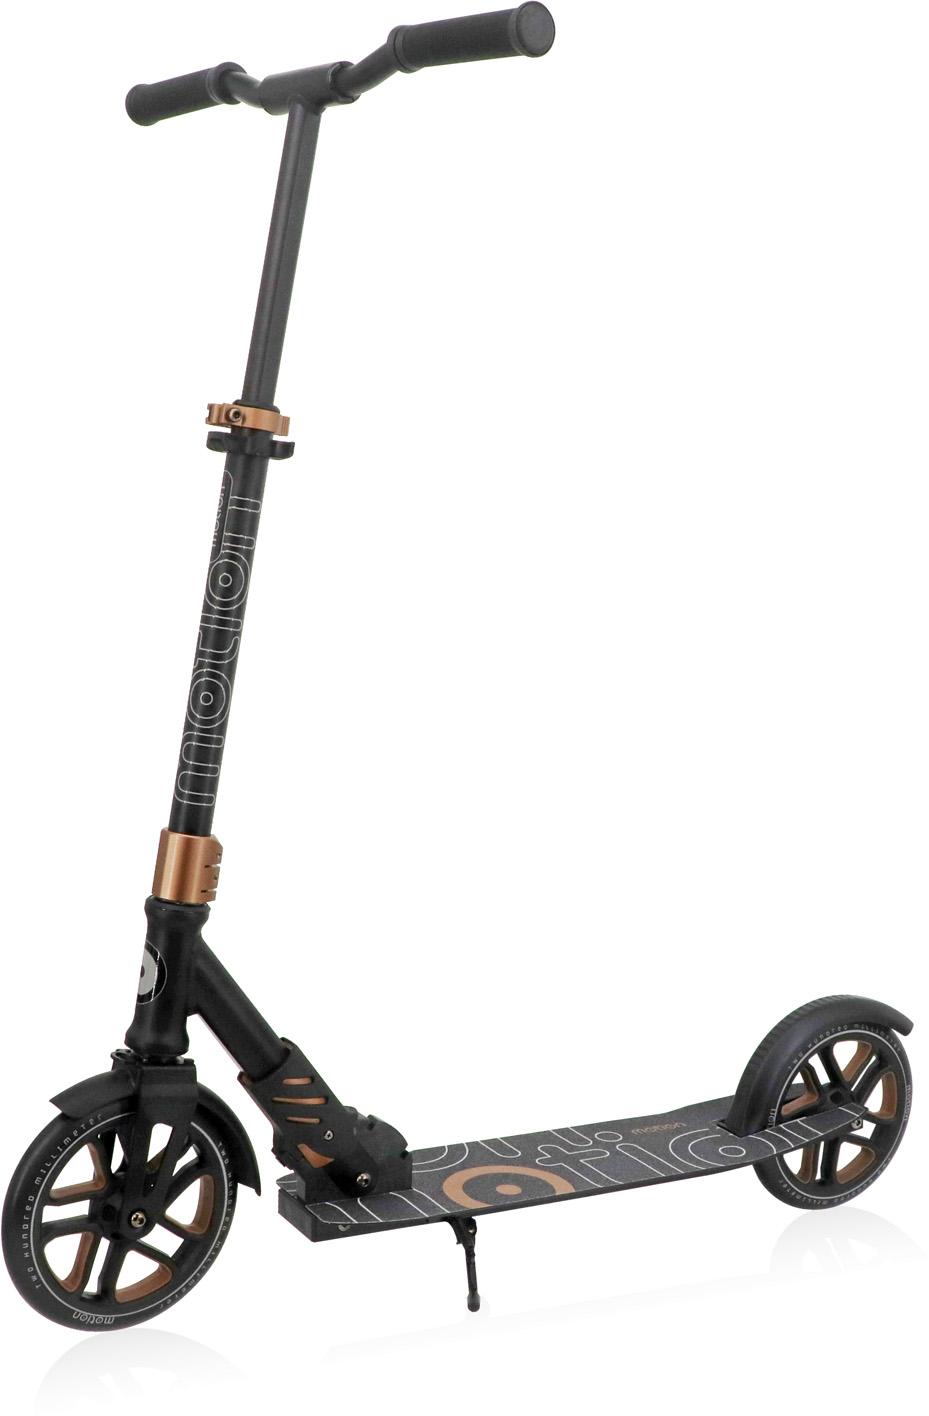 Motion Scooter | Speedy 200mm | Bronze-Black